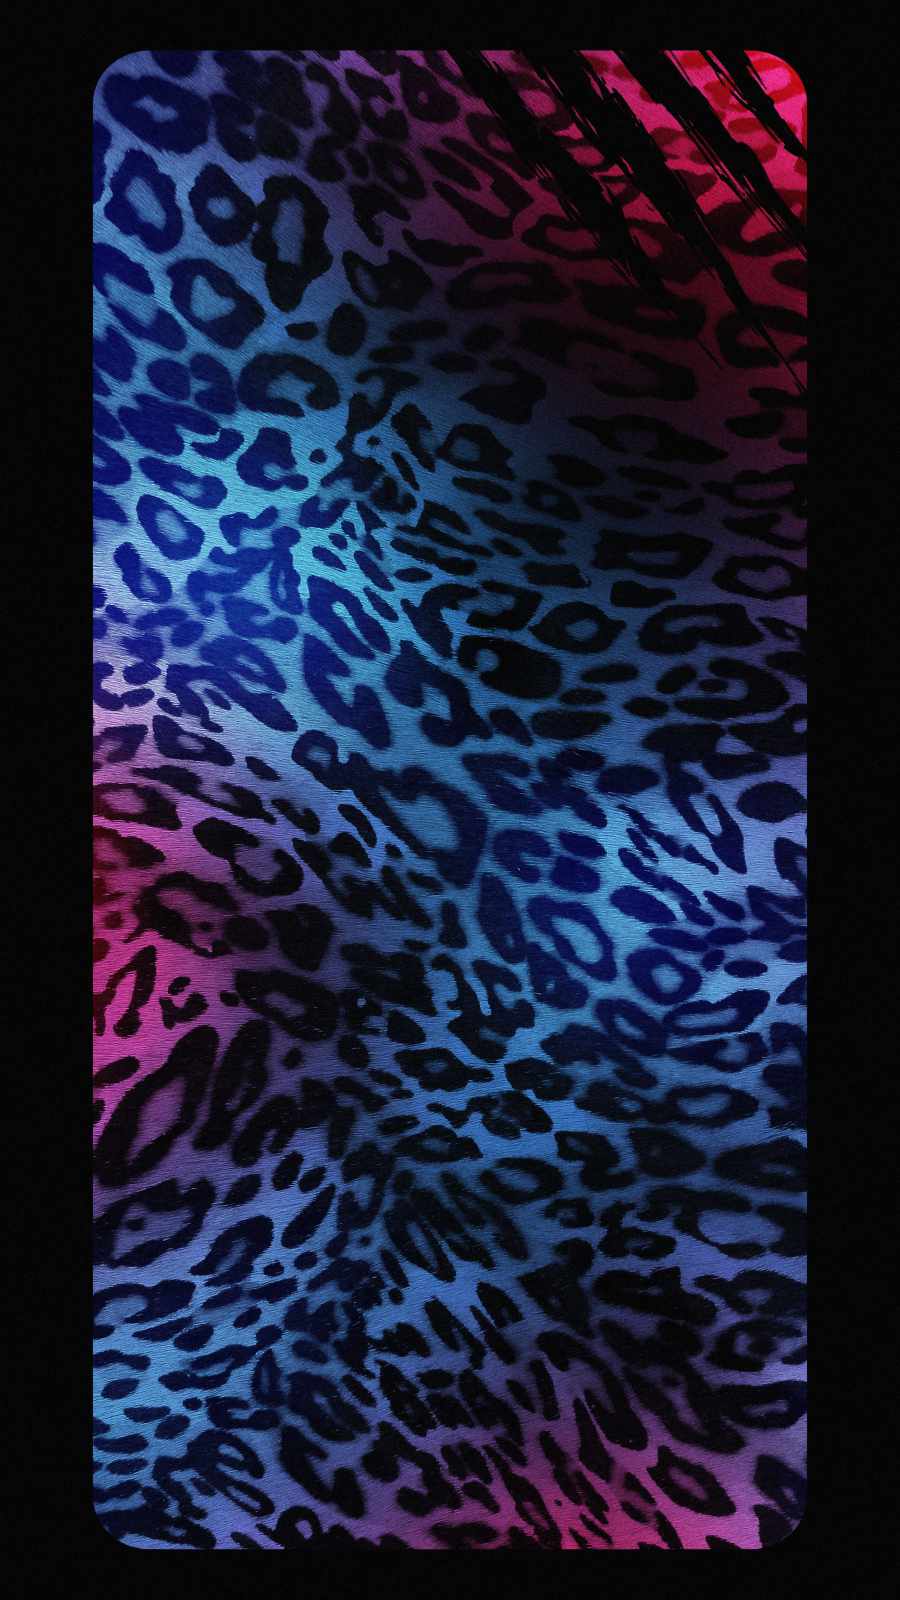 Leopard Skin IPhone Wallpaper Wallpaper, iPhone Wallpaper